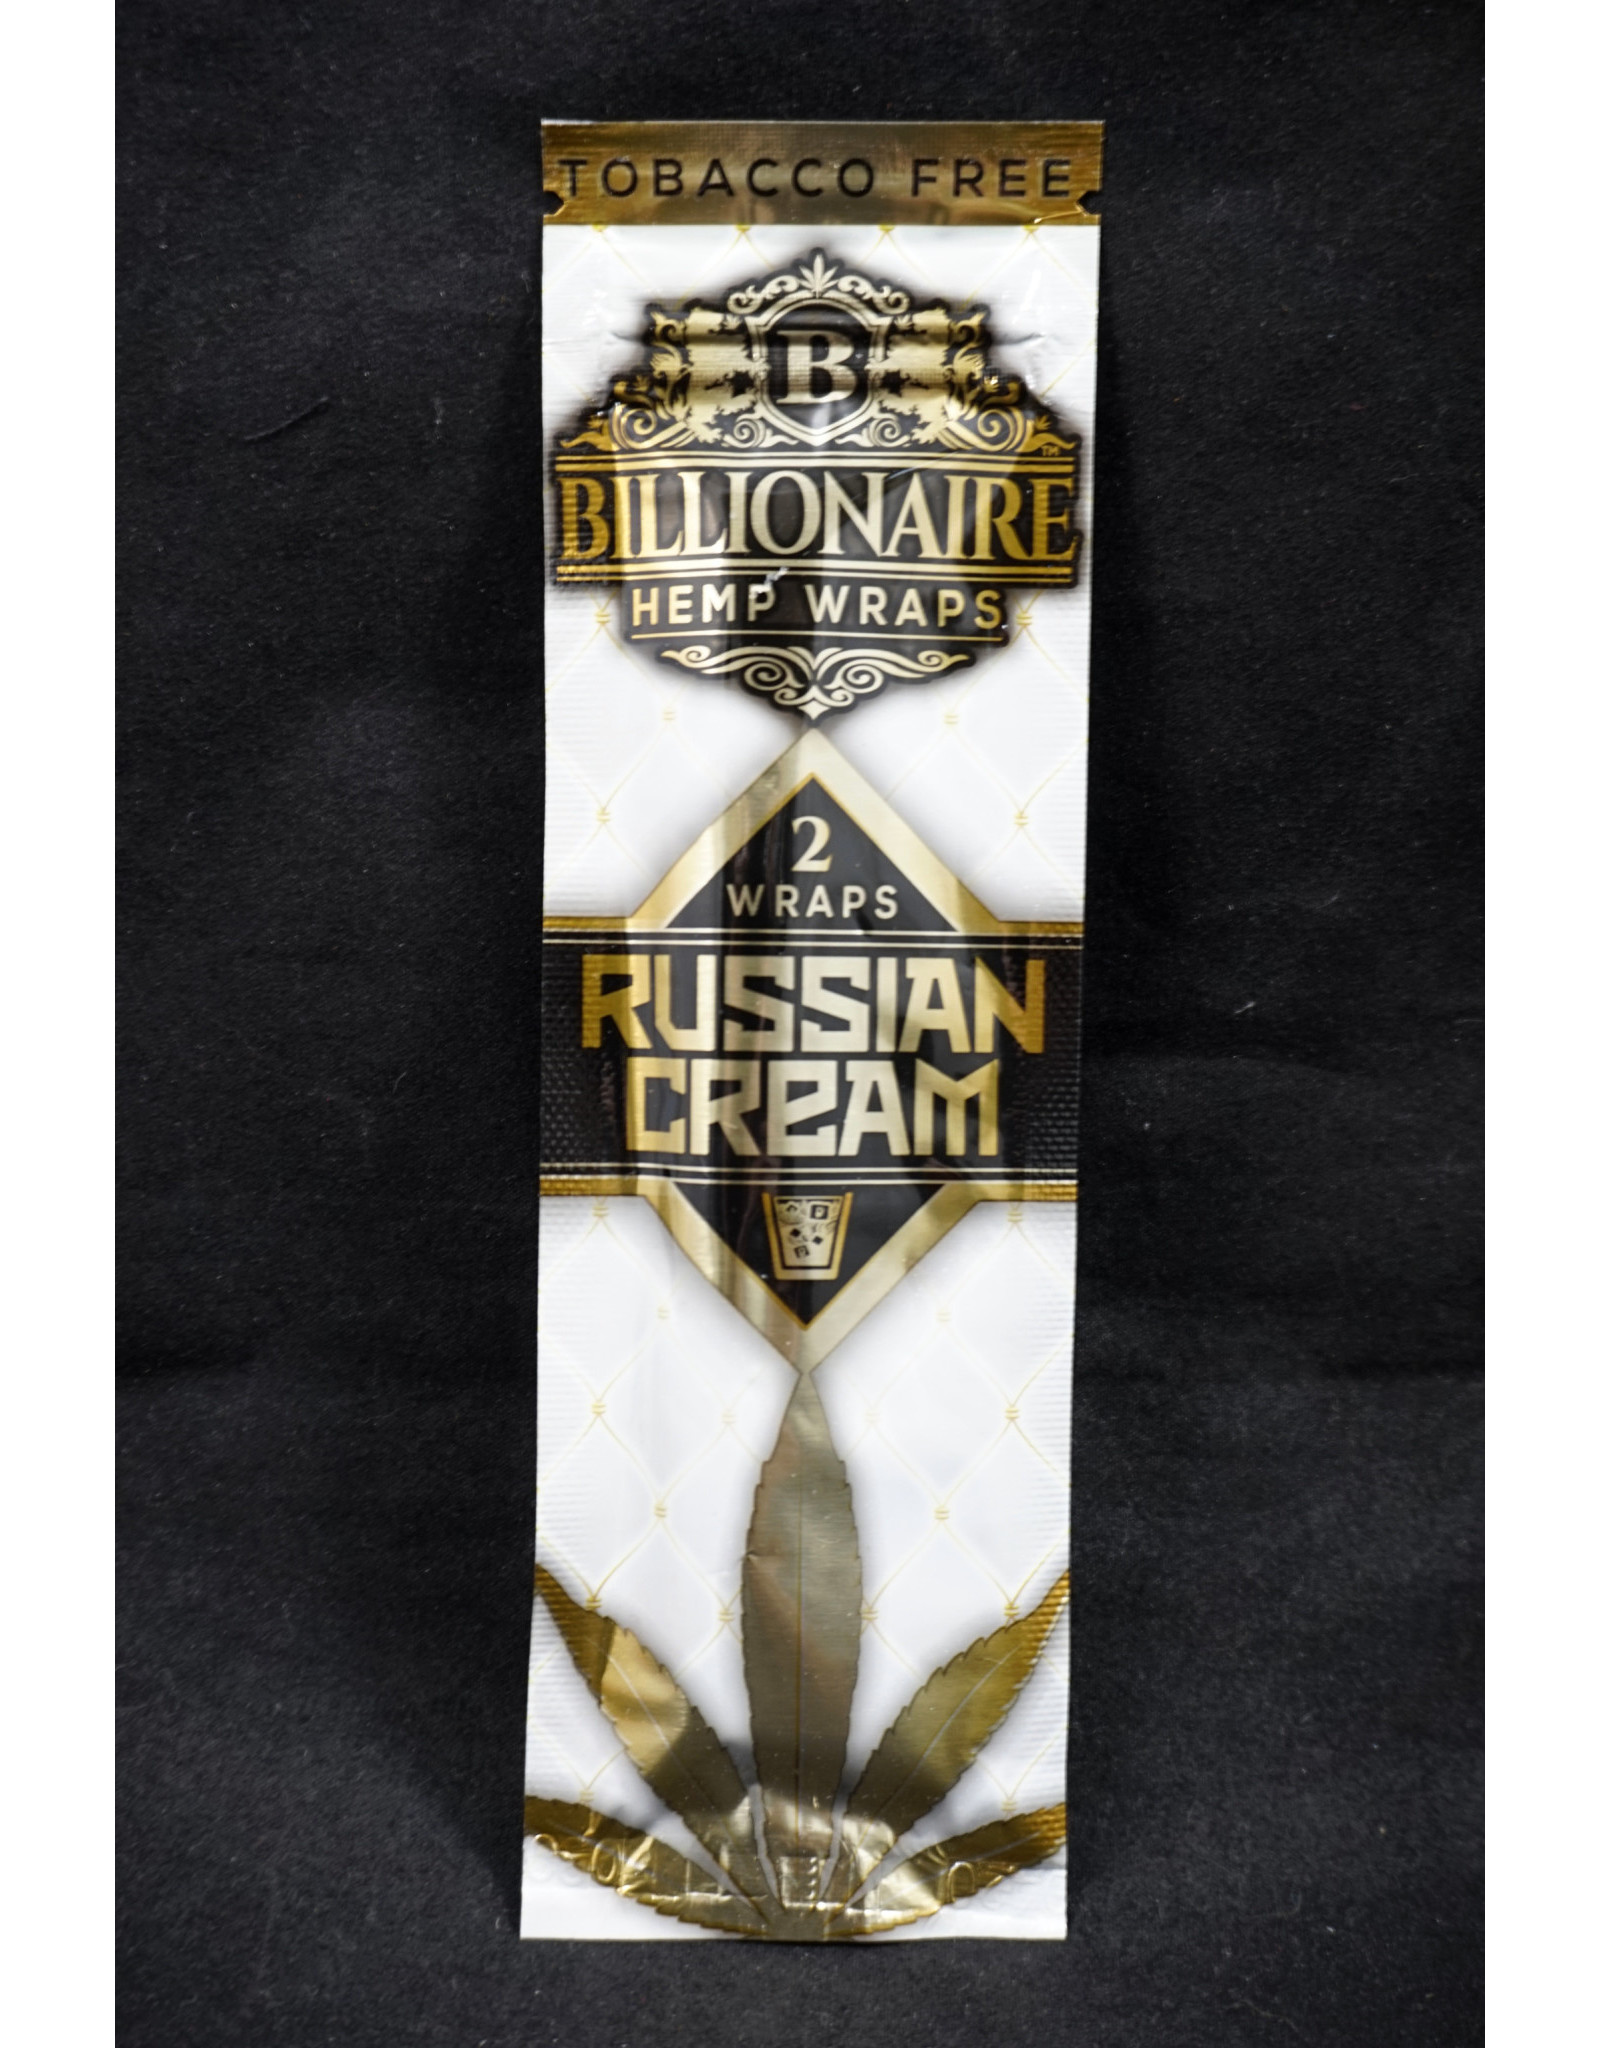 Billionaire Hemp Wraps - Russian Cream